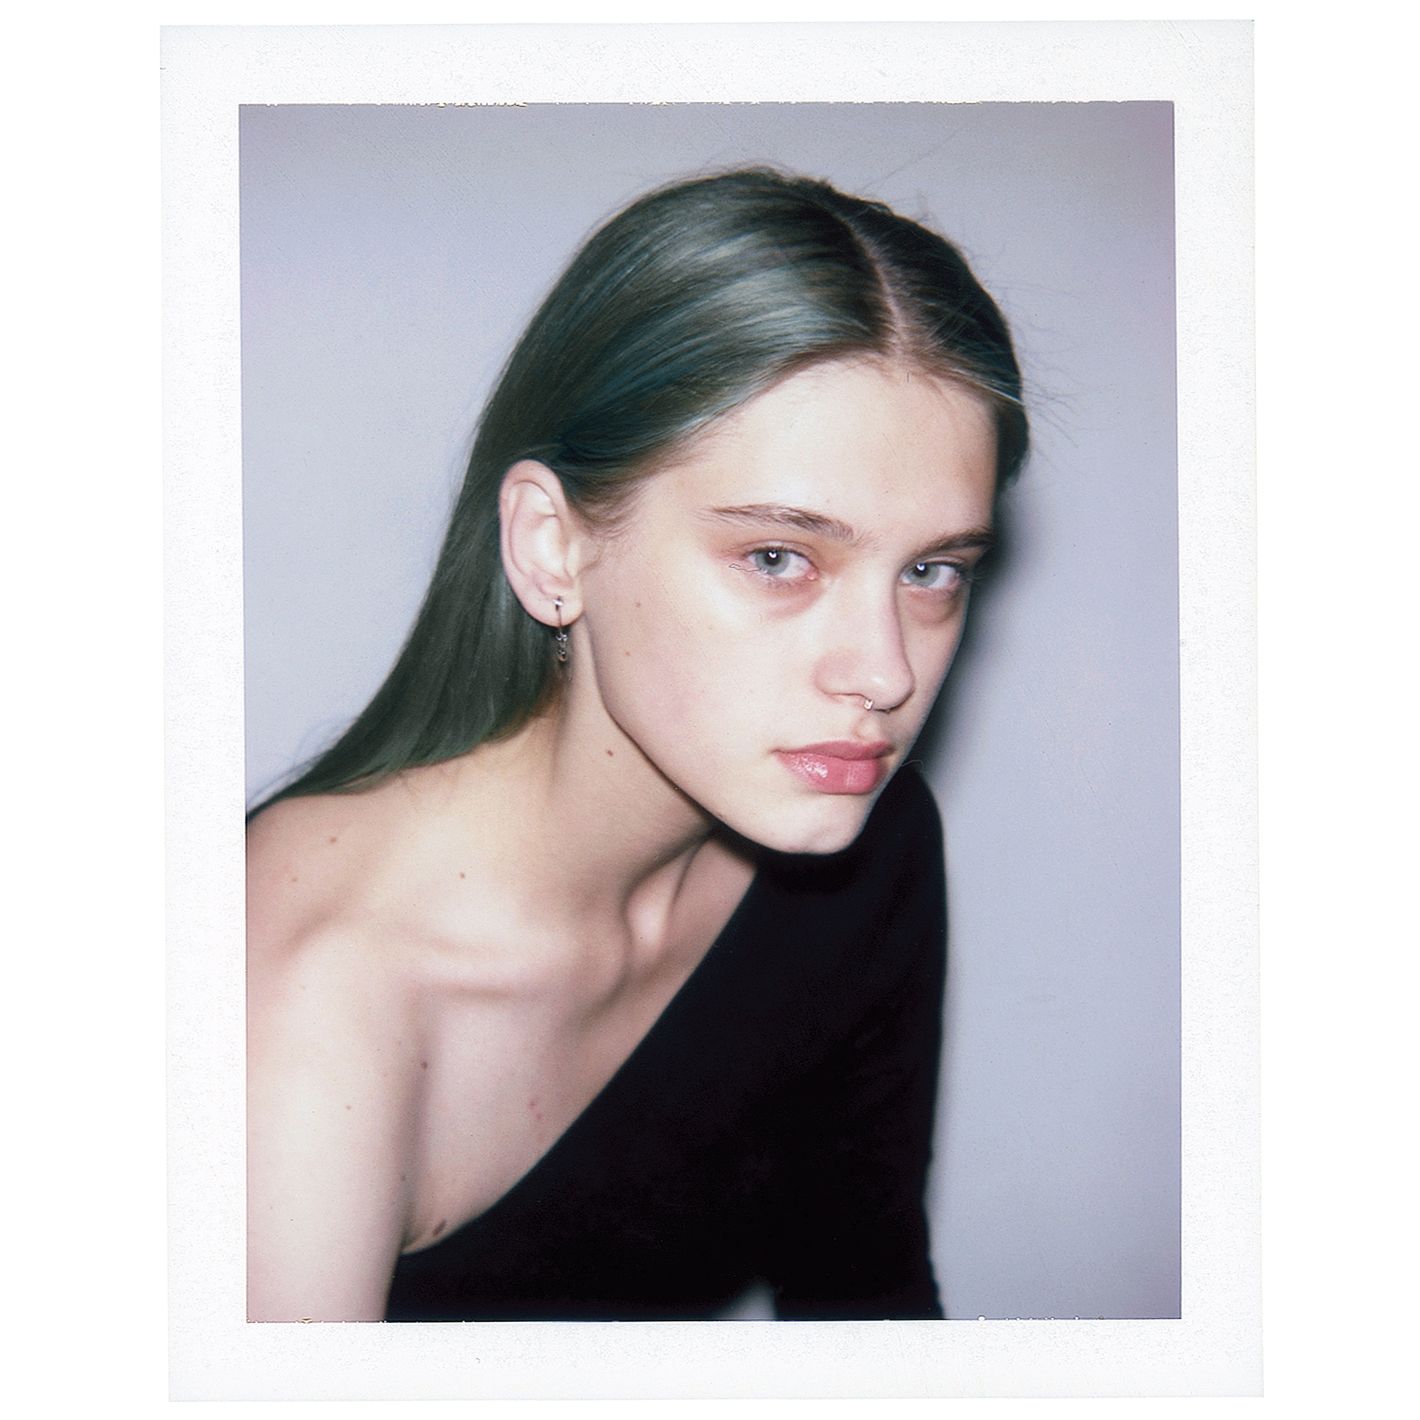 Meet Green-Haired Model Sasha Belyaeva